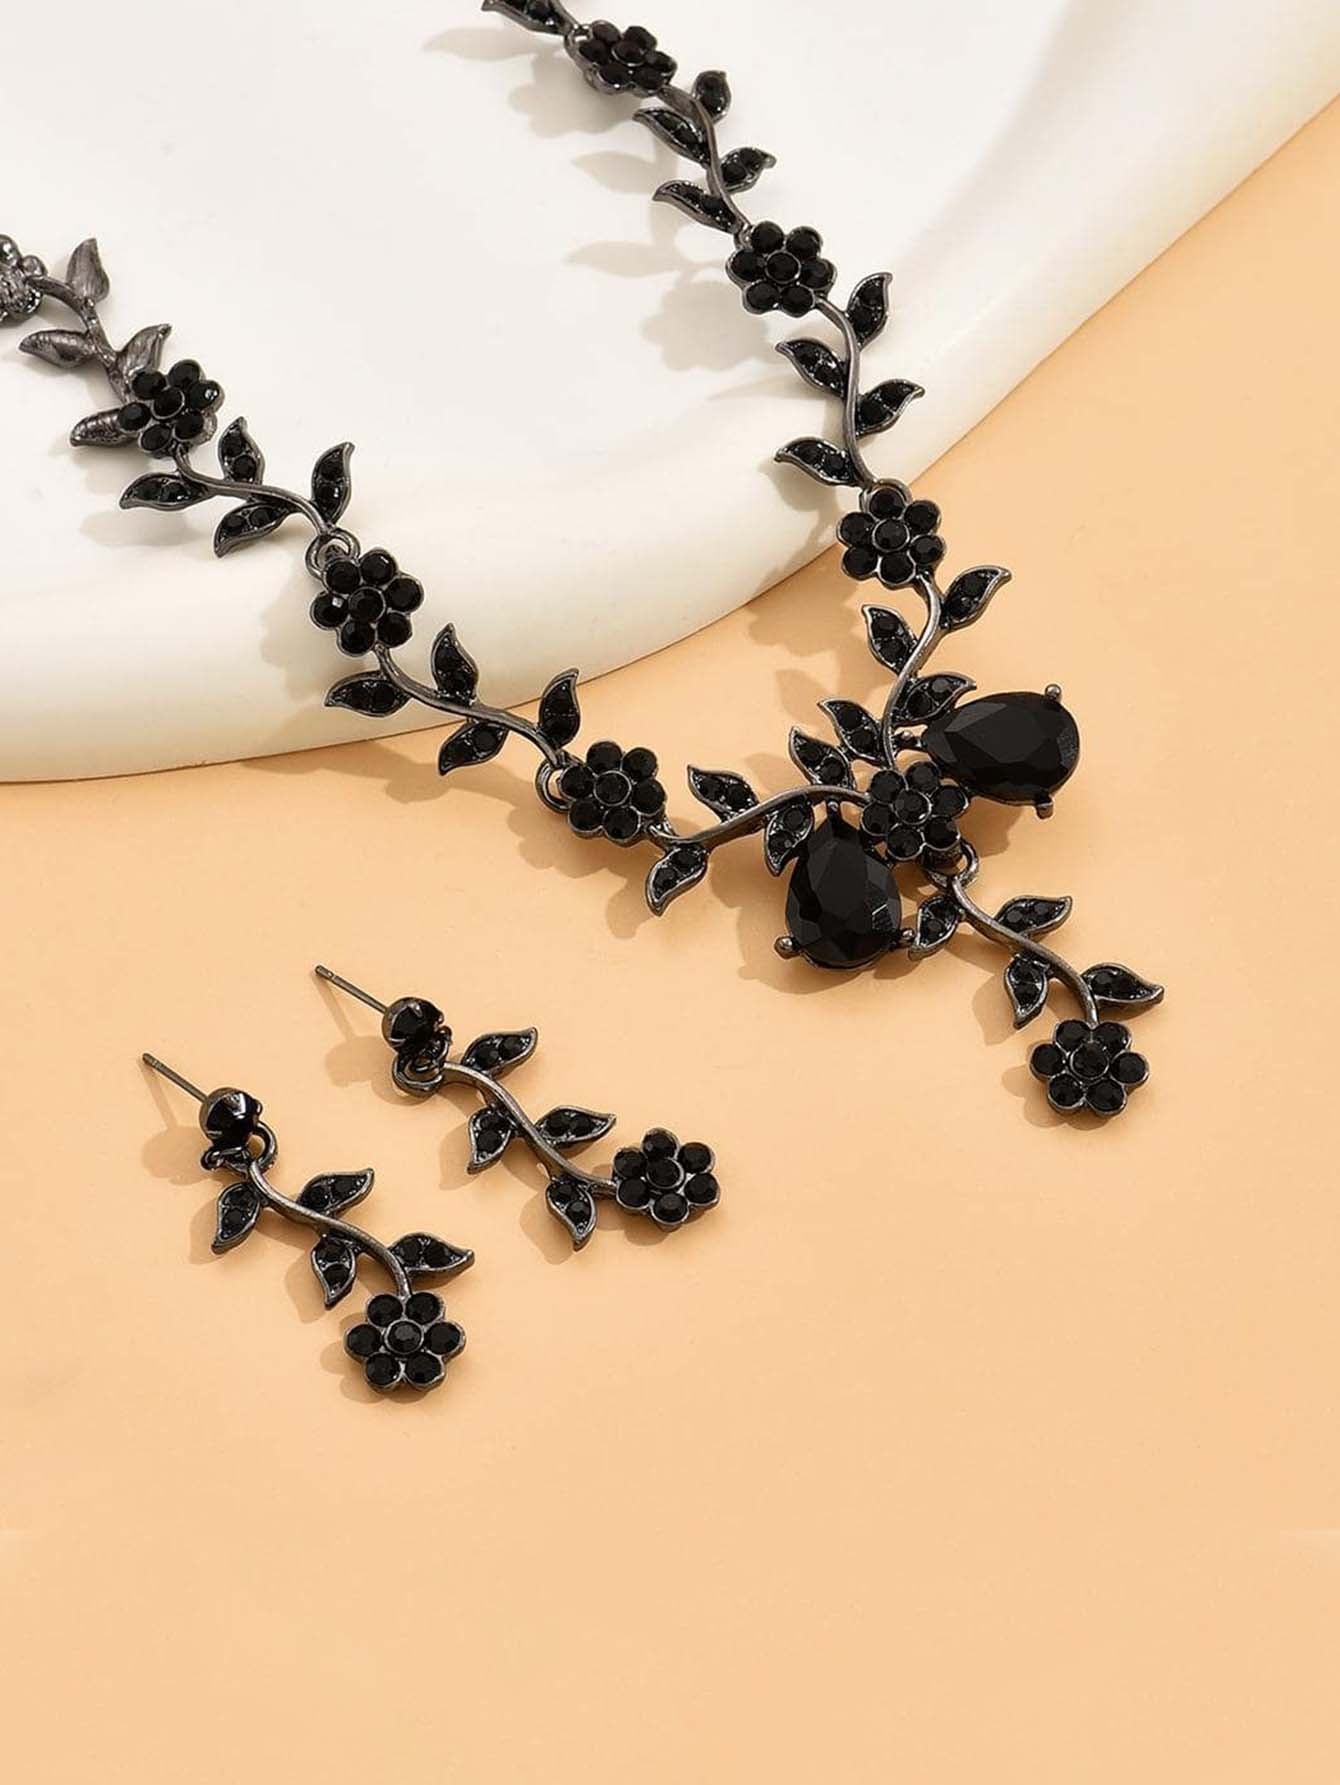 Rhinestone Flower Decor Jewelry Set - Black - FD ⚡